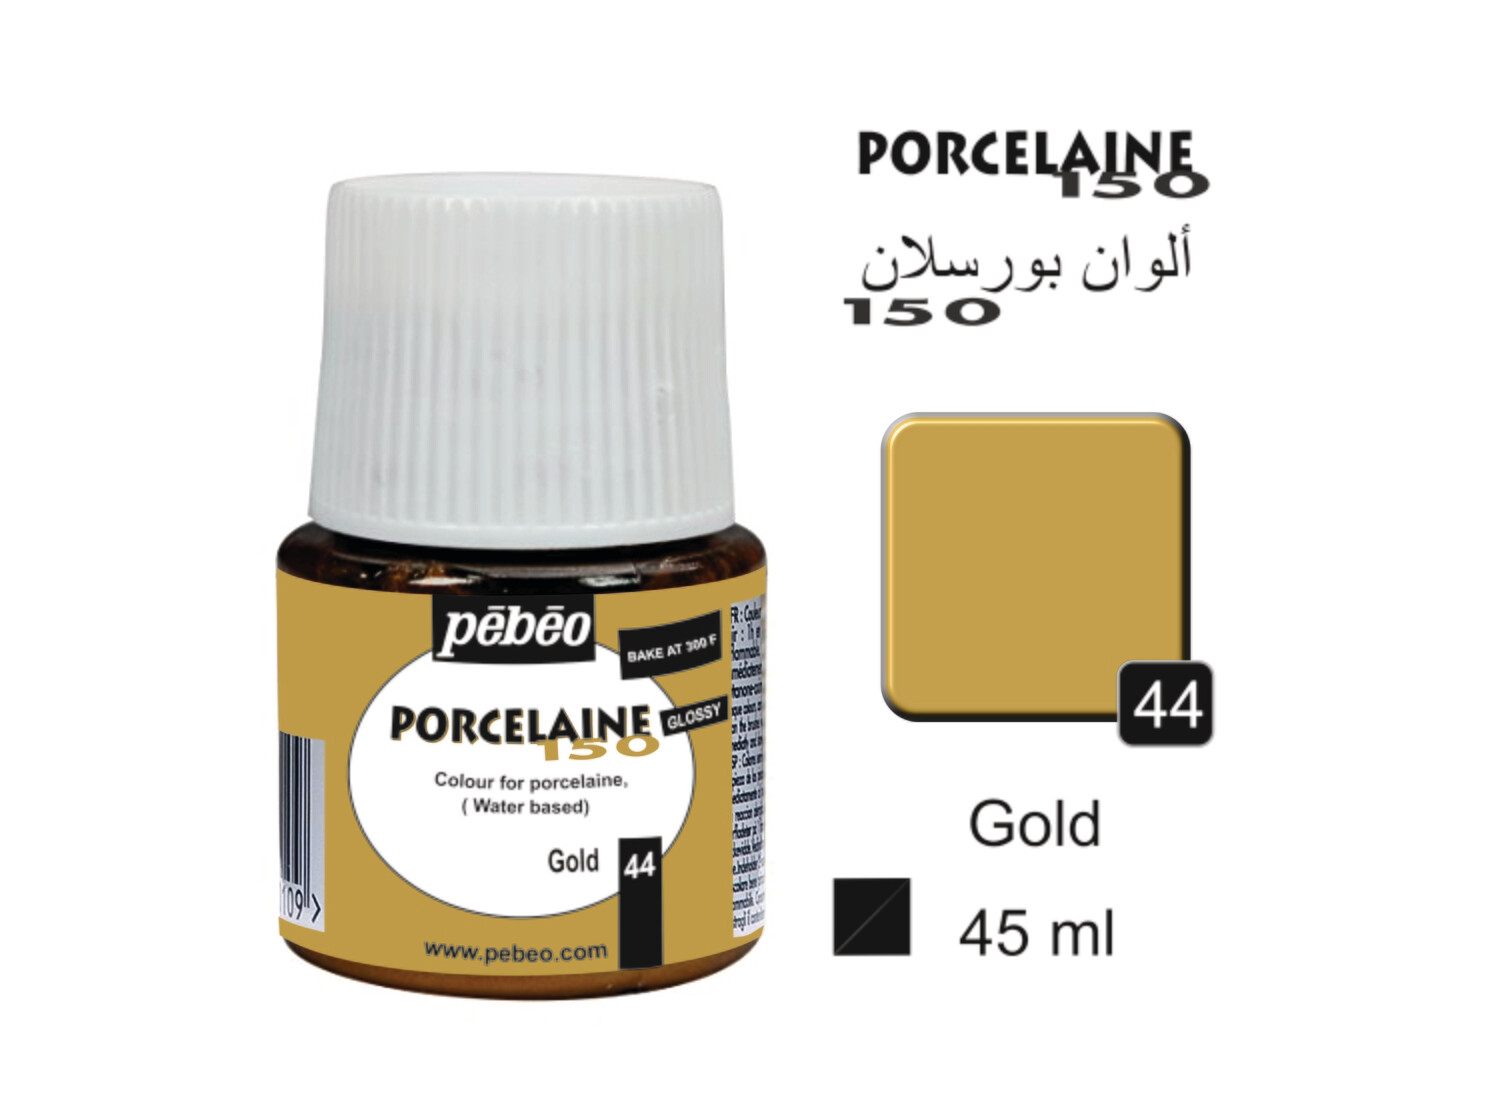 PORCELAINE 150, GLOSS 45 ml, Gold No. 44